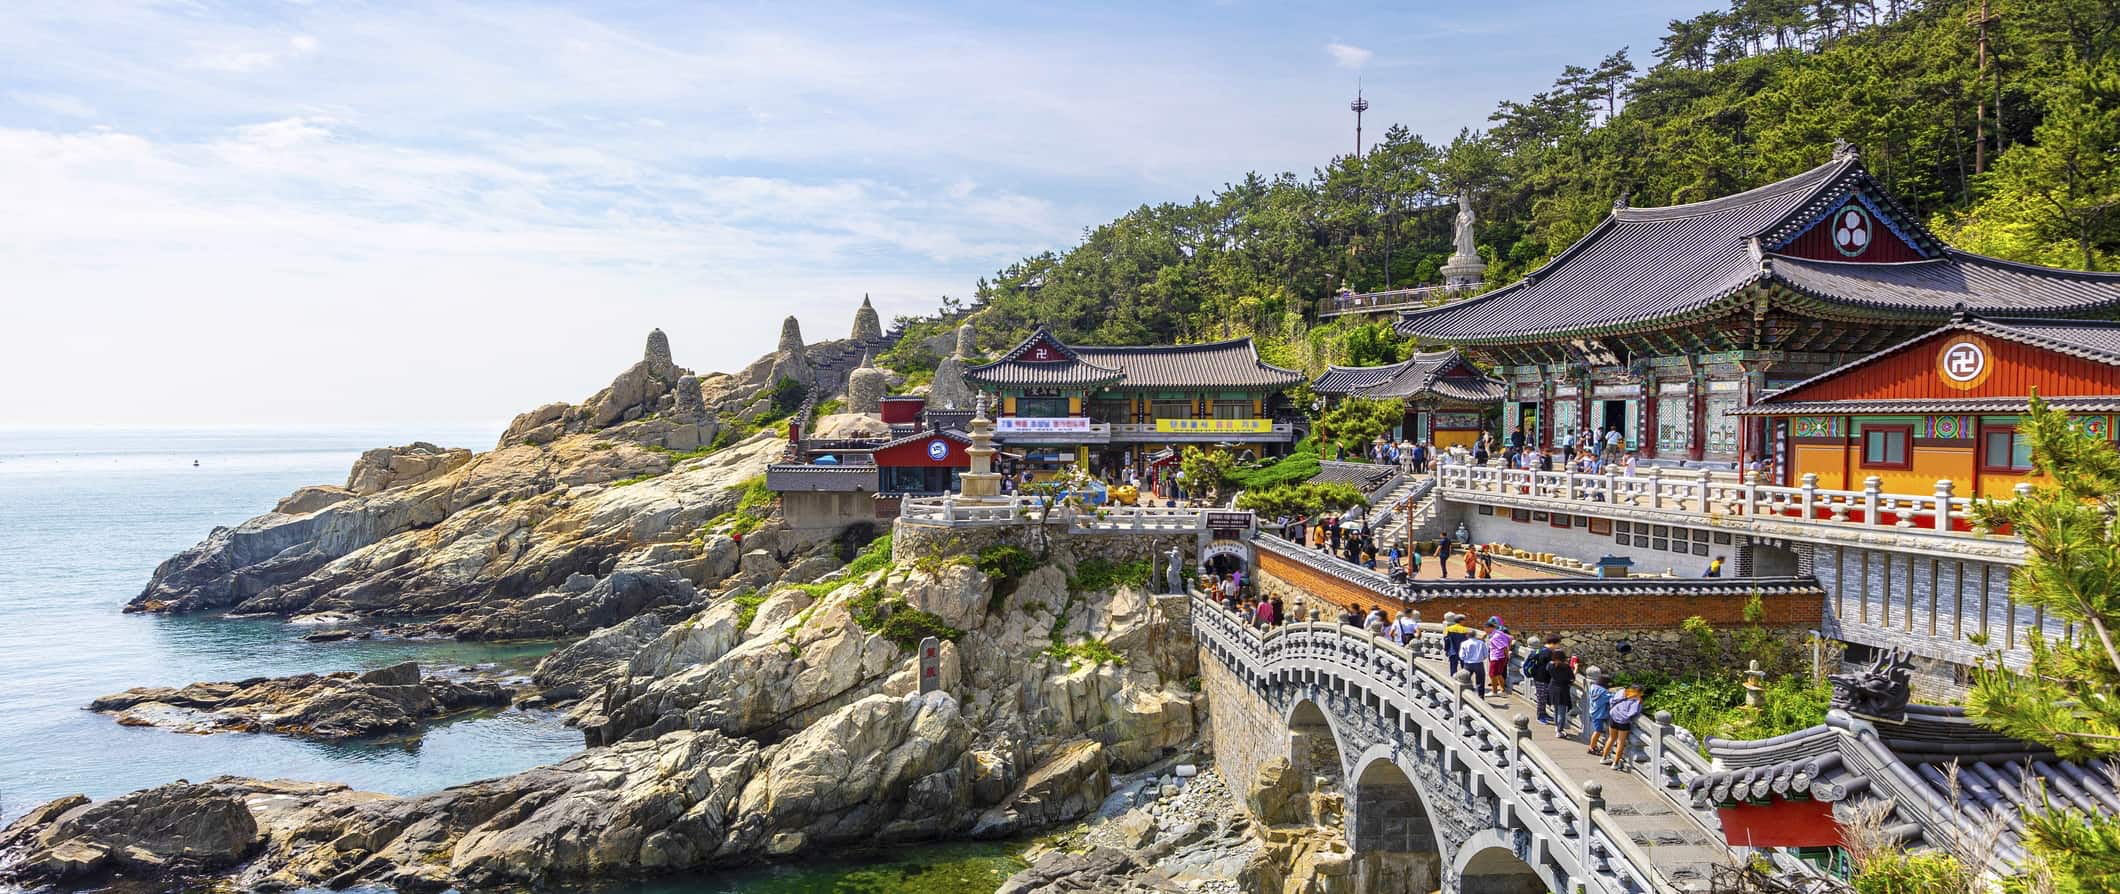 Historic buildings along the rugged coast of South Korea